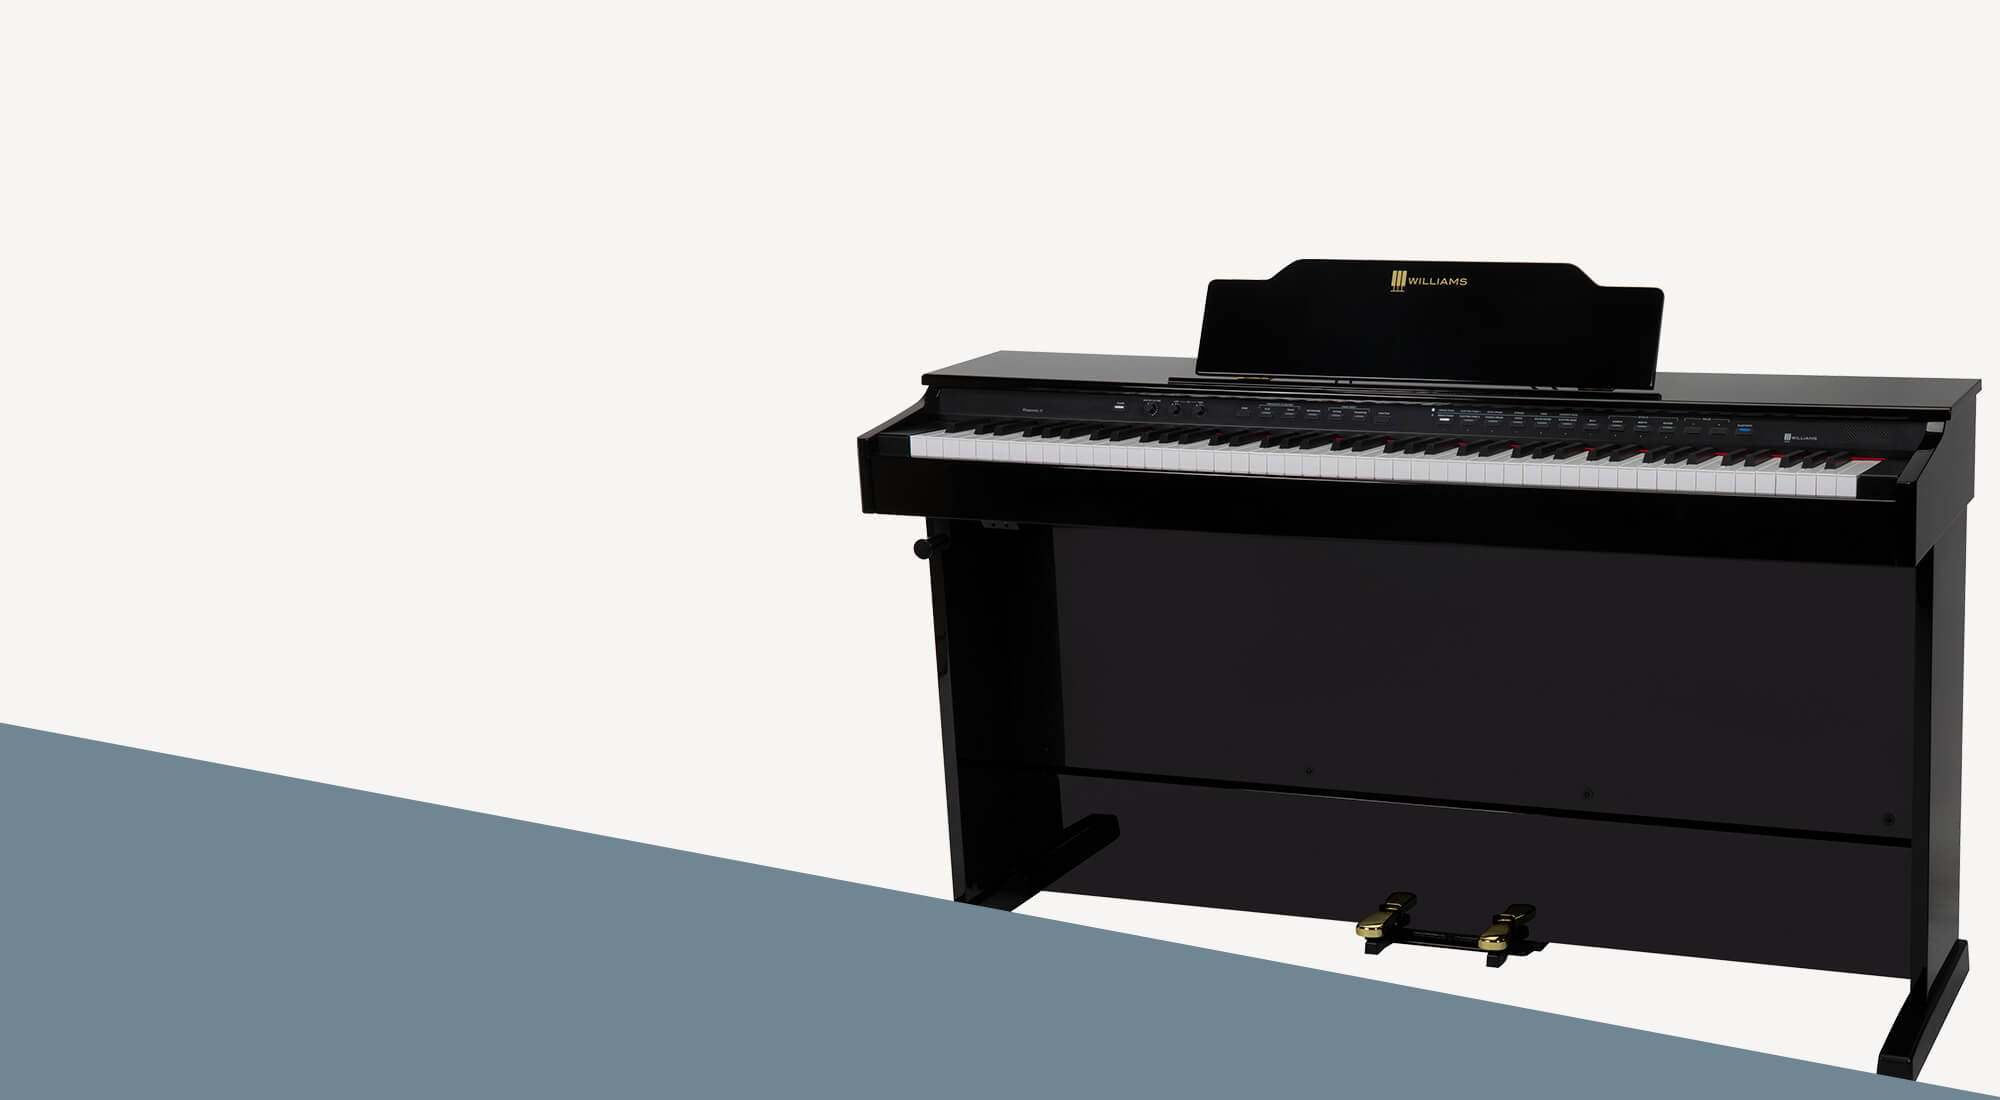 William Rhapsody III digital piano.